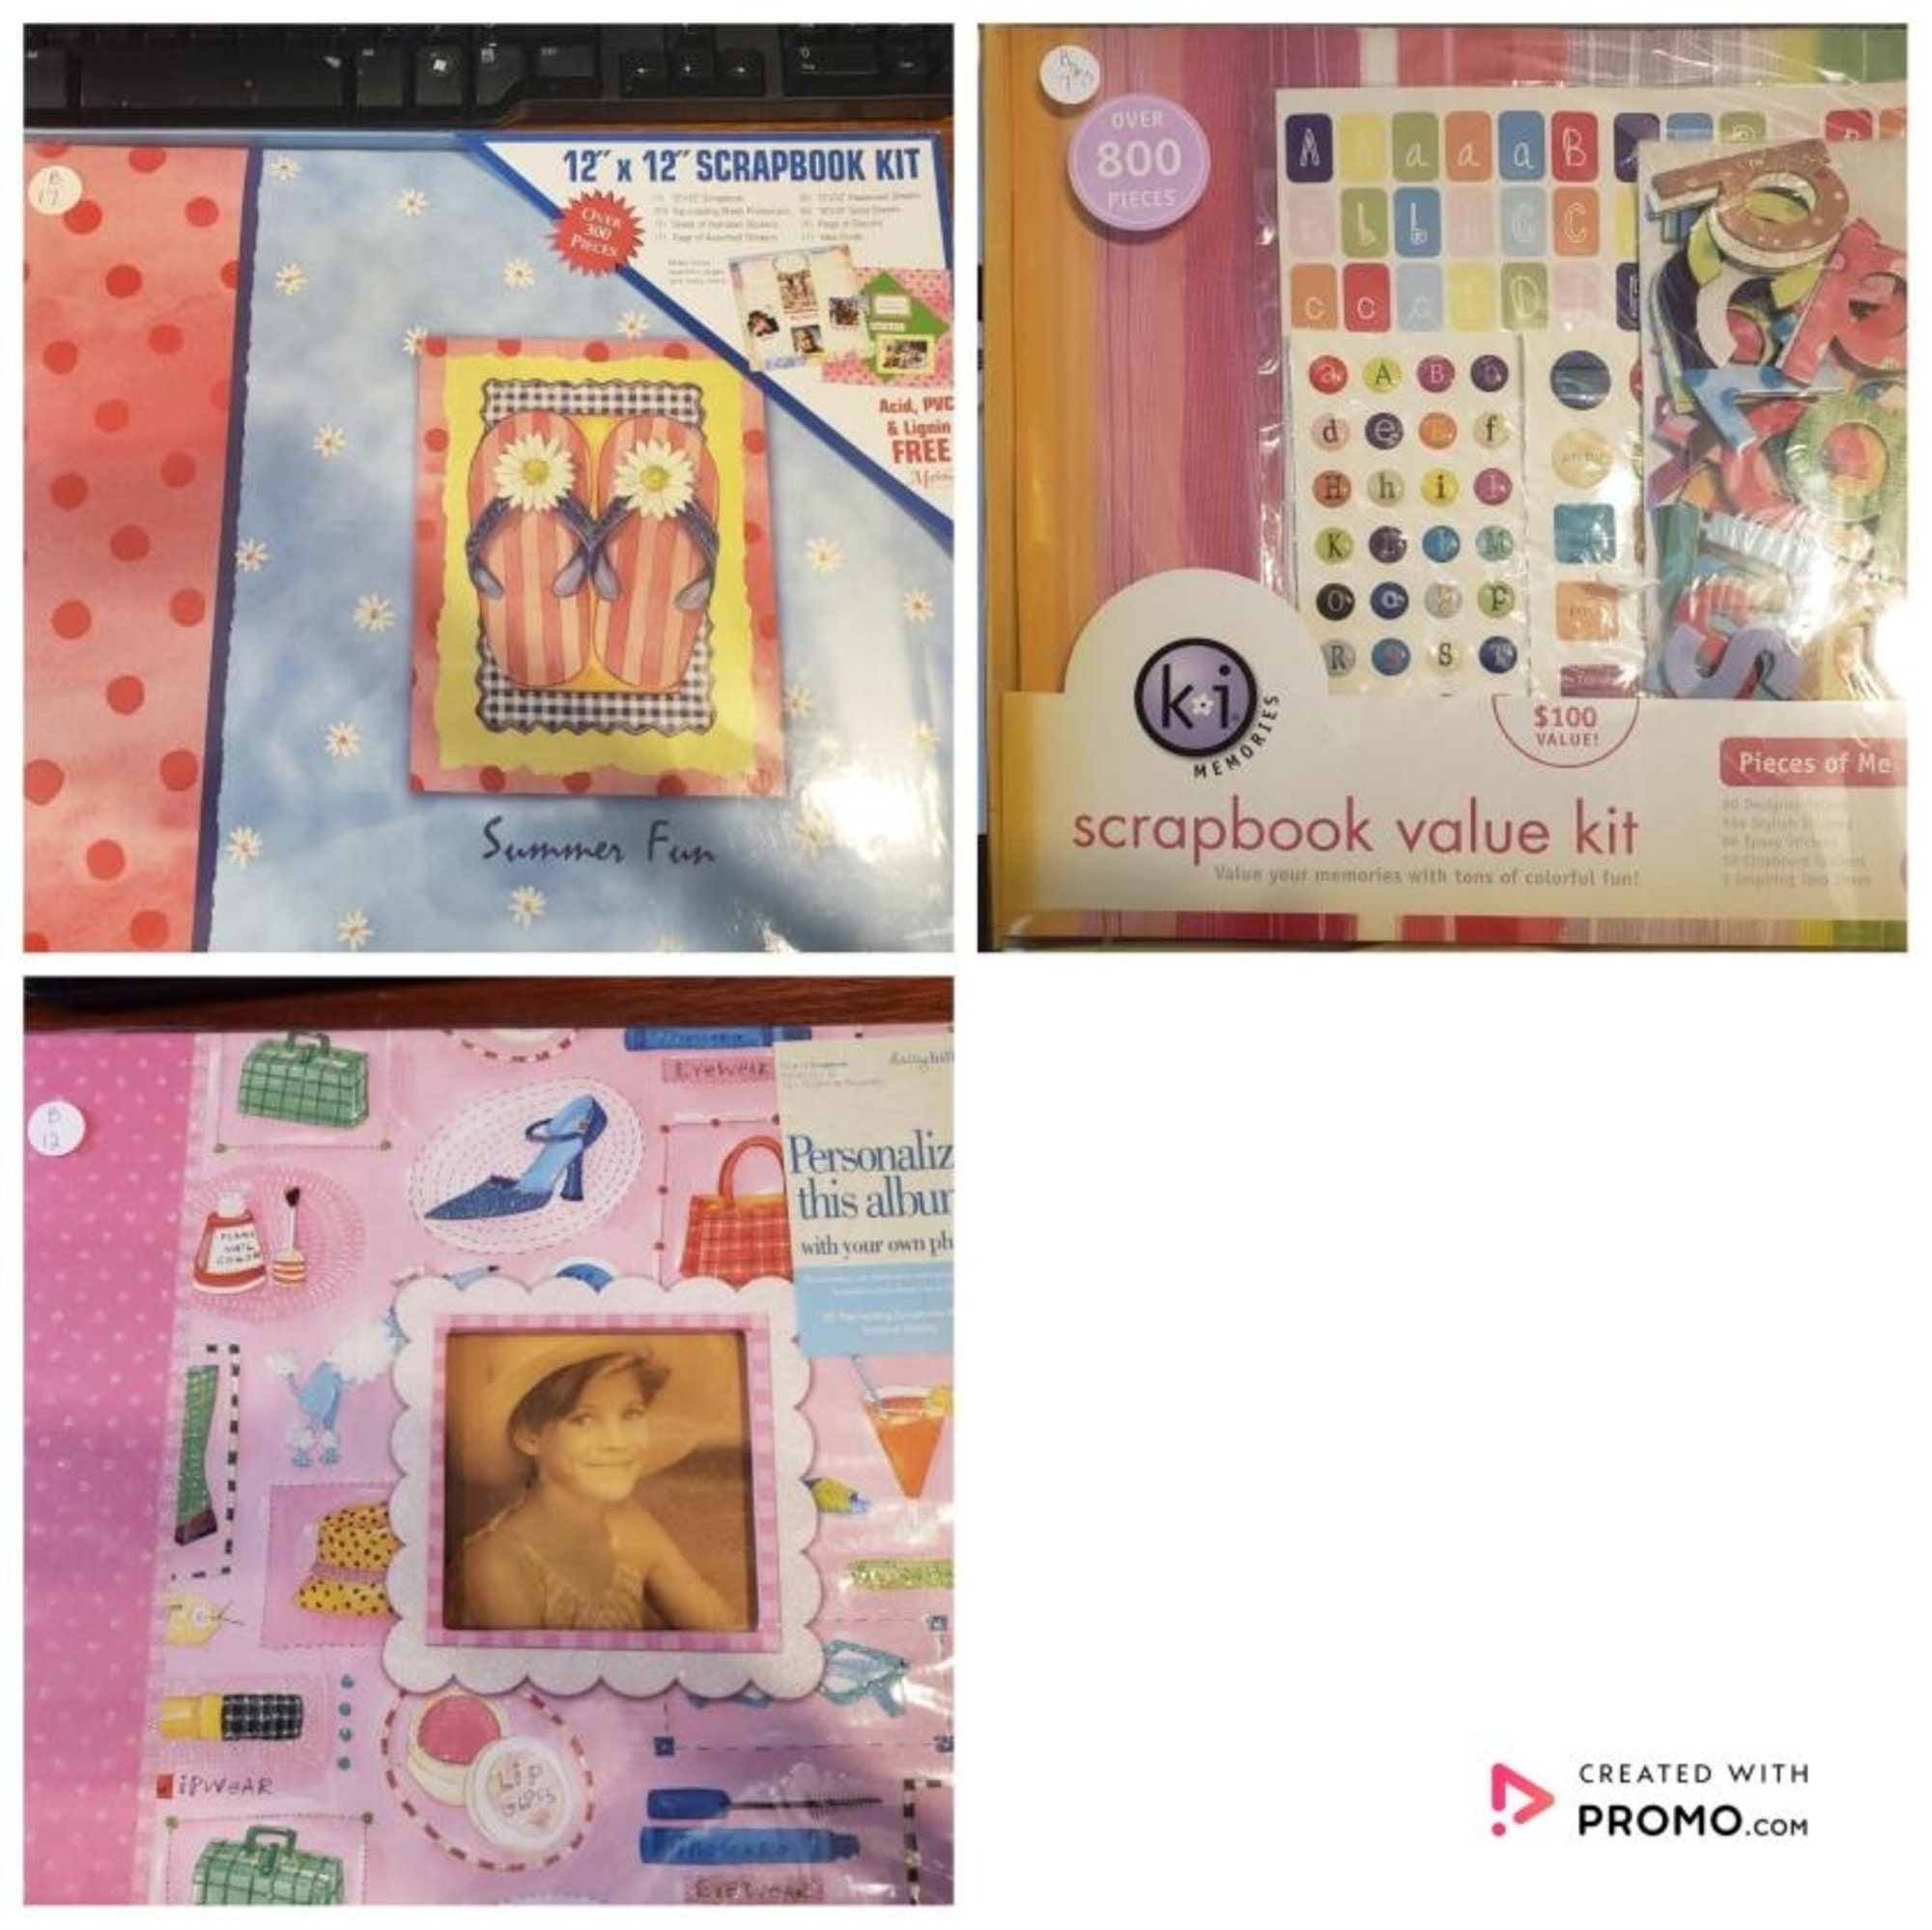 12 X 12 Scrapbook Kits, 12x12 Albums, Summer Scrapbook Kit, KI